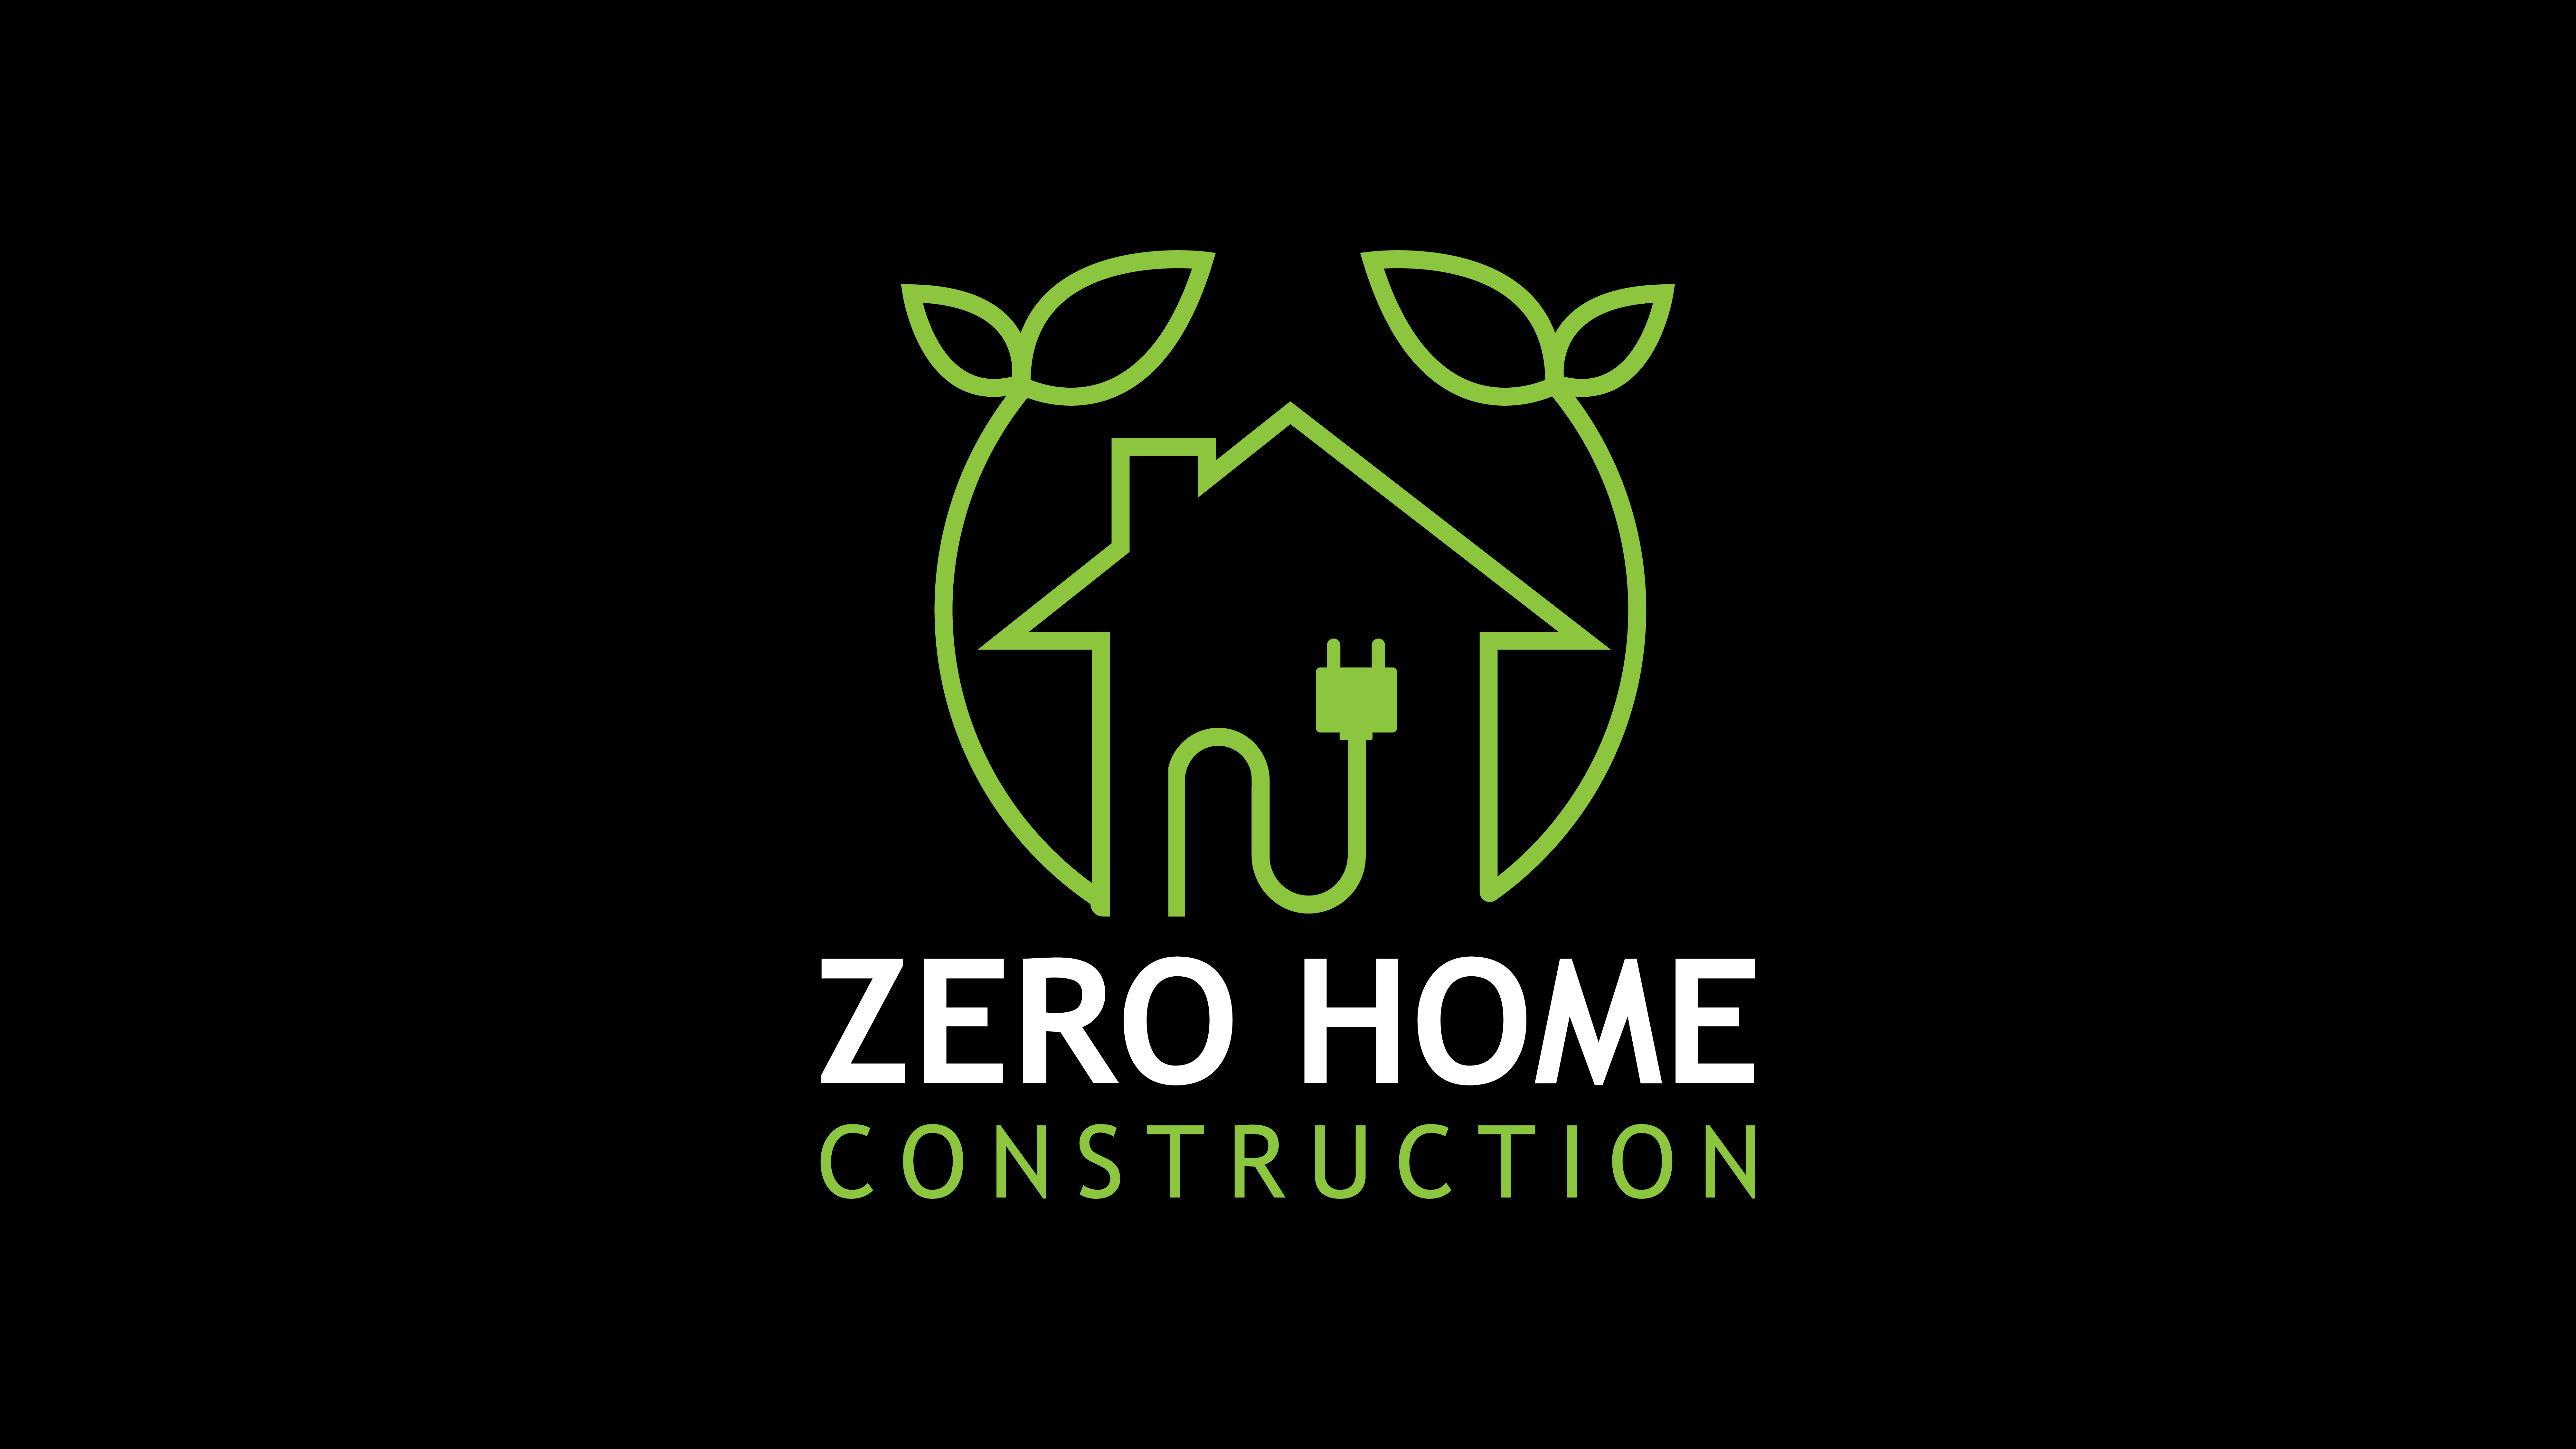 Zero Home Construction Inc. company logo